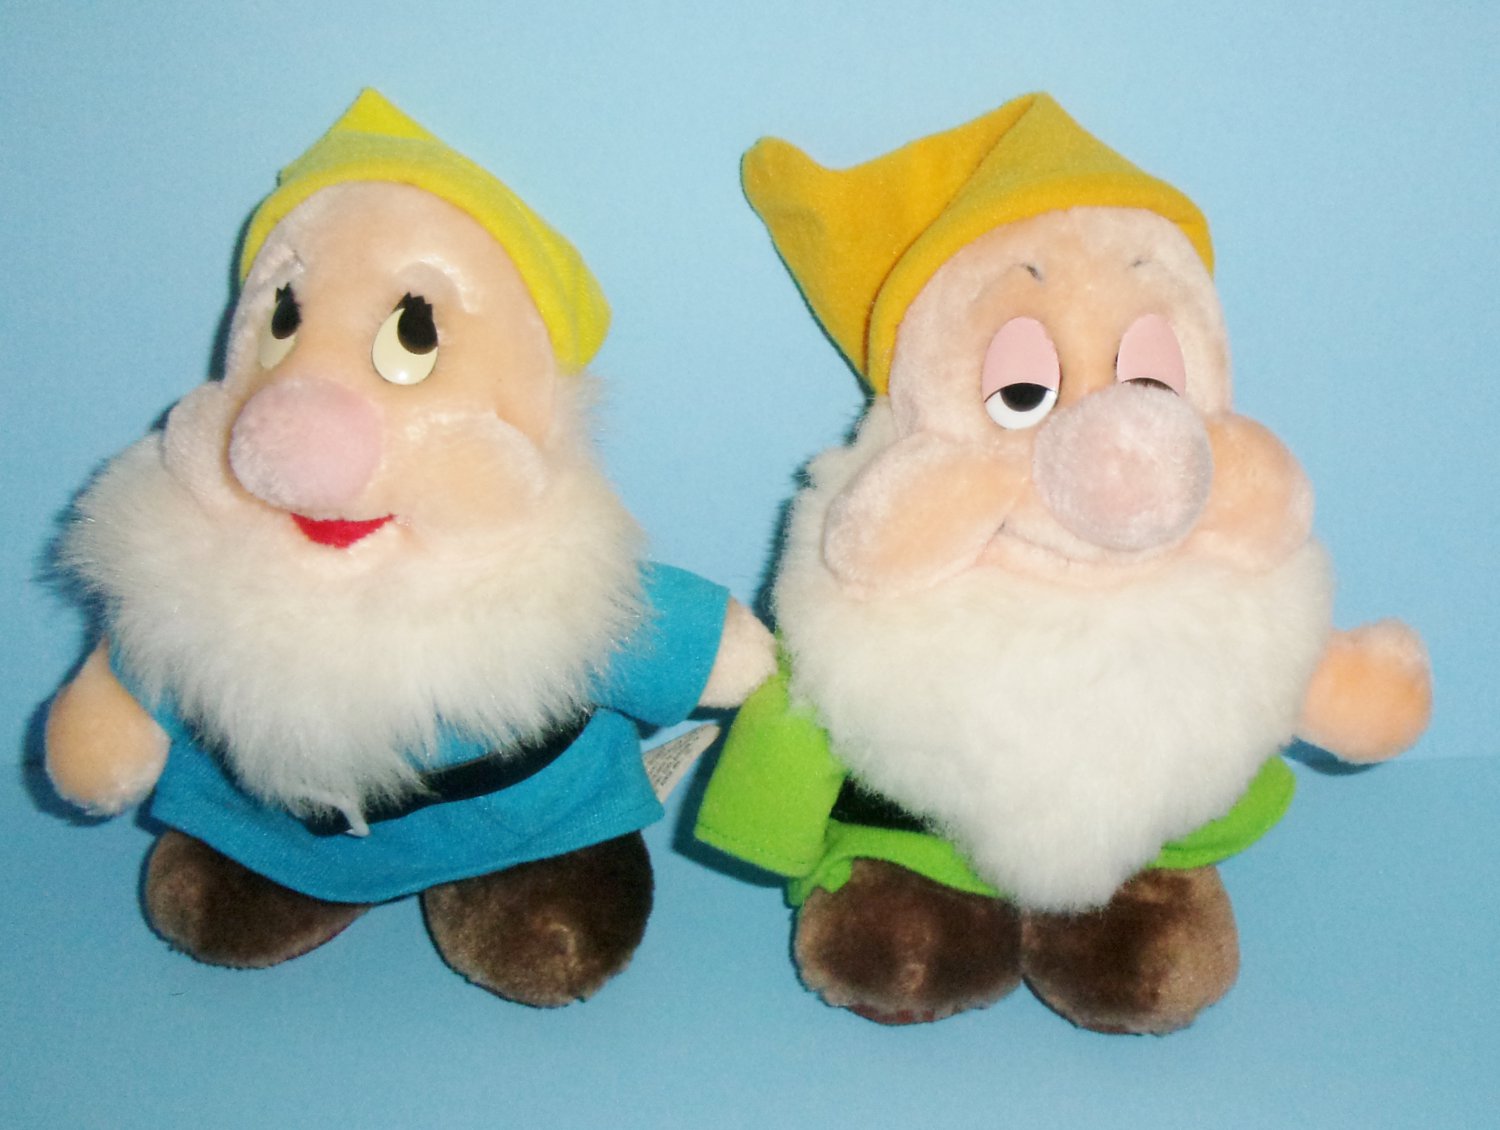 Snow White Plush Plush Sleepy and Happy Dwarfs 8 Inches Vintage Disney Parks